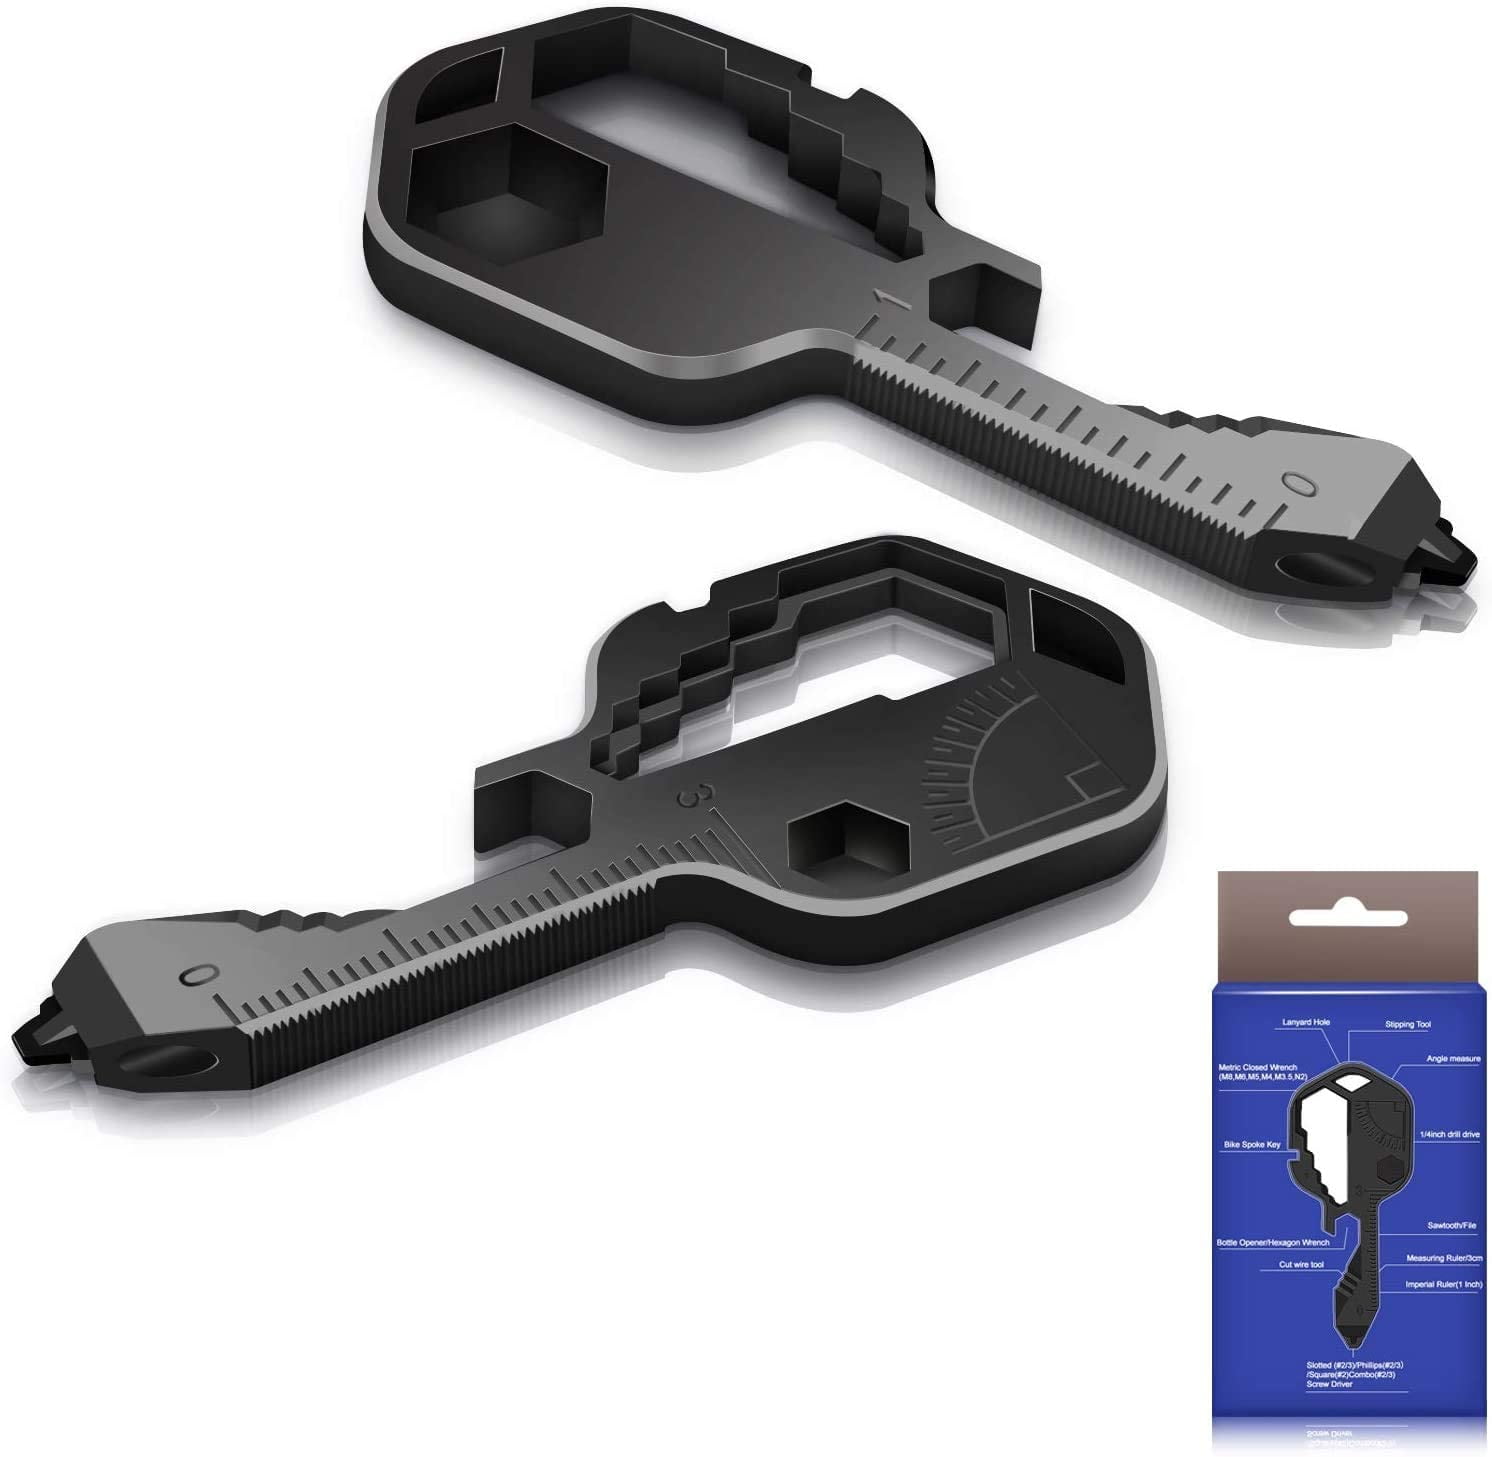 Osflydan 24 In 1 Stainless Steel Multi-Tool Key Shaped Pocket Tool for Keychain W/Bottle Opener,Key Shaped Pocket Tool Outdoor Tool Black